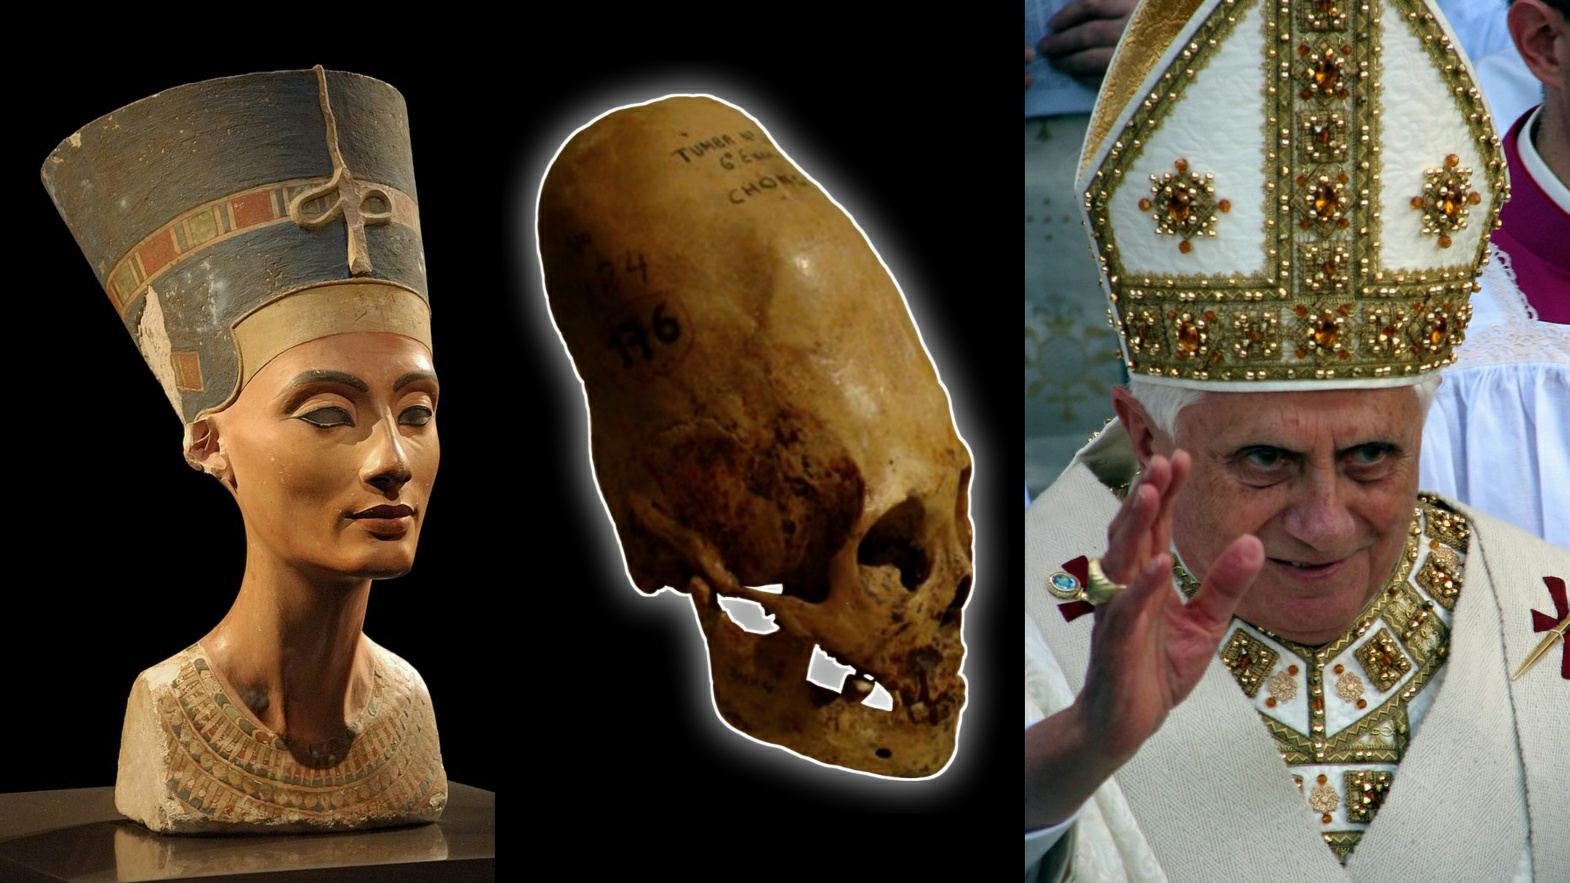 Queen Nefertiti, elongated skulls and the Pope's miter